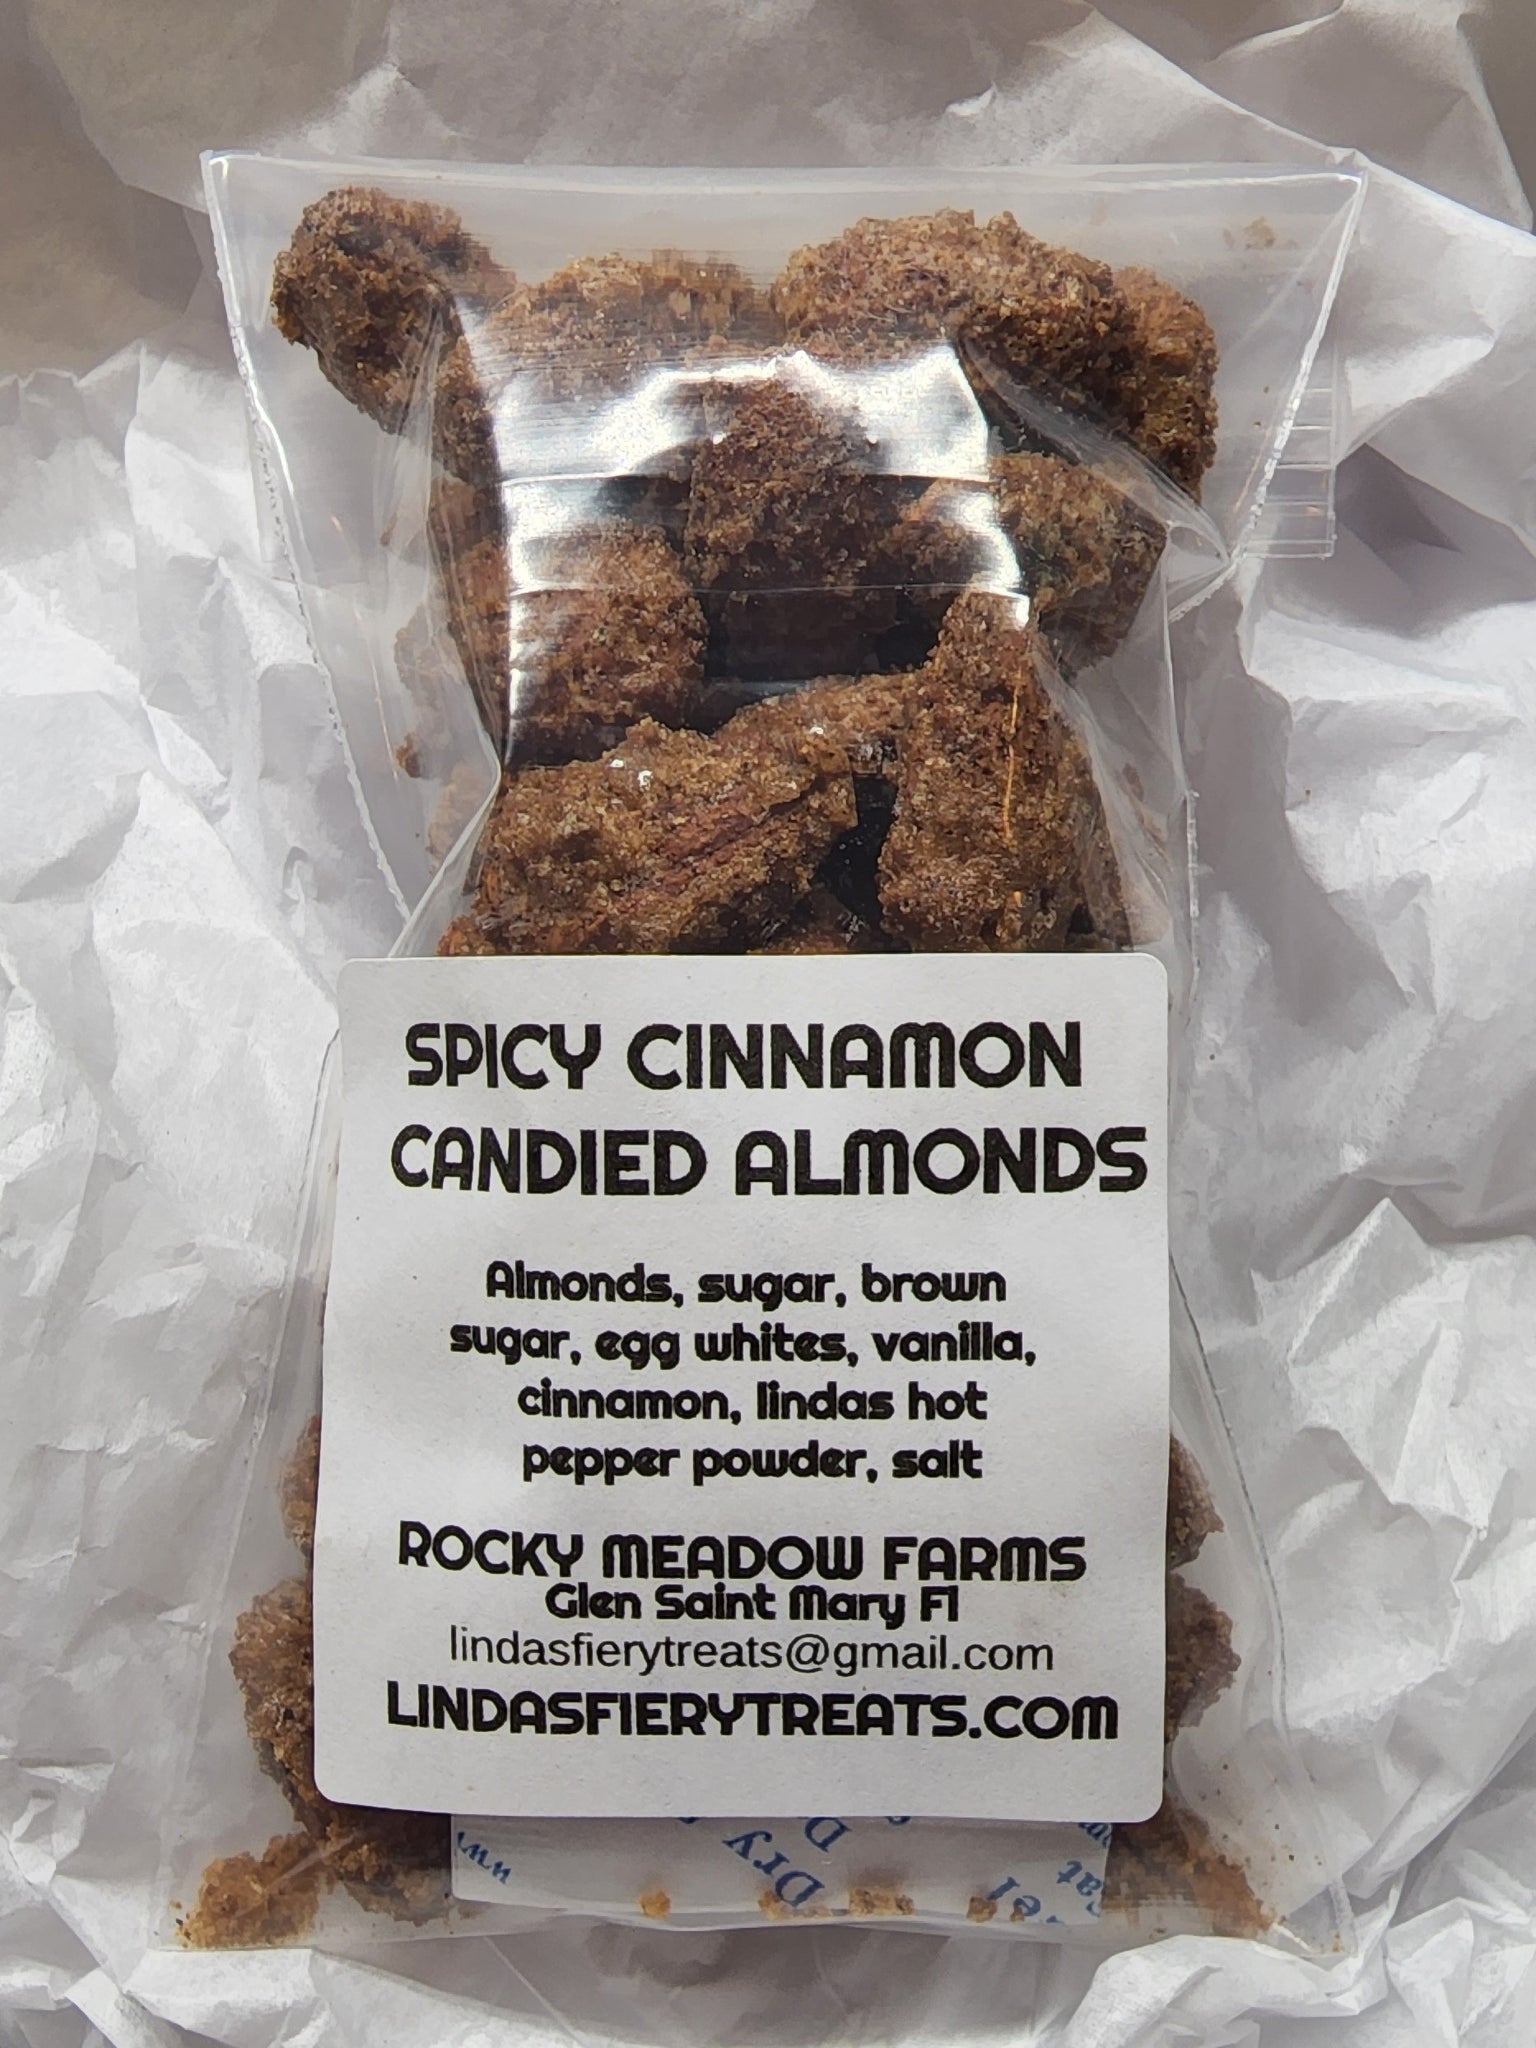 ALMONDS - Spicy Cinnamon Almonds - A mild candied Almond with nice cinnamon flavor - Ingredients: Almonds, Sugar, Brown Sugar, Egg Whites, Vanilla, Cinnamon, "Linda's hot pepper powder", Salt